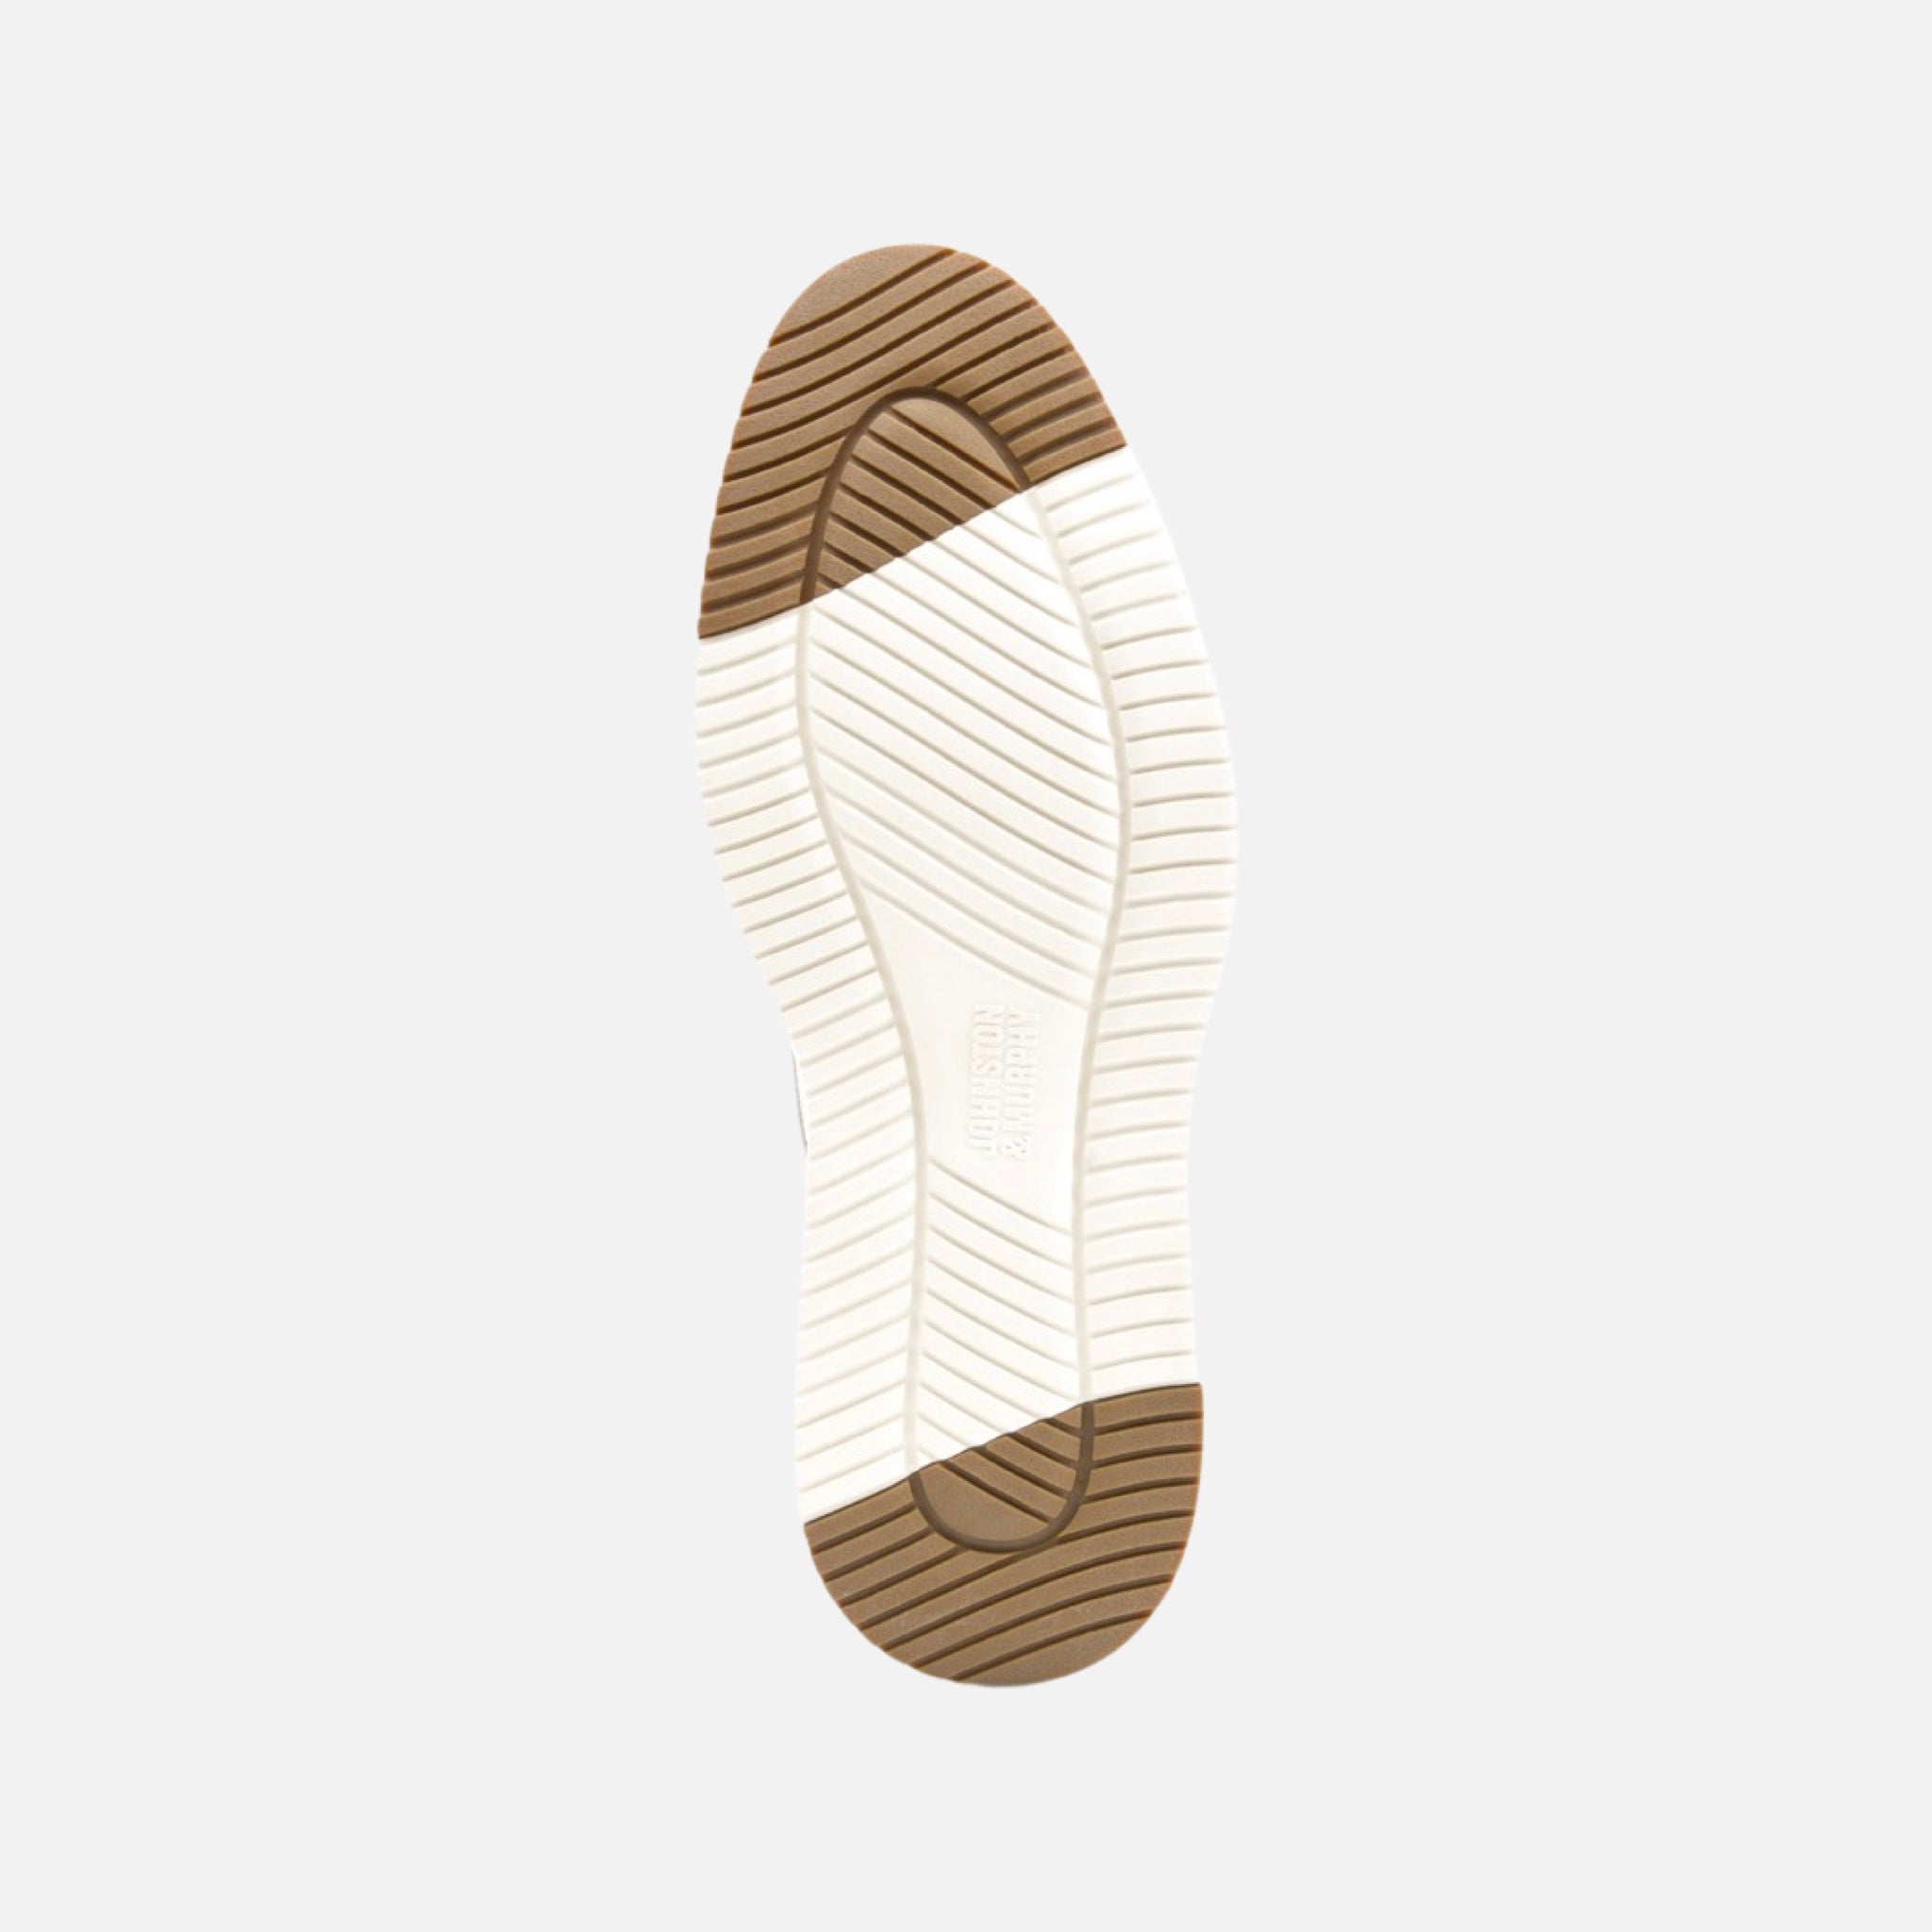 Johnston & Murphy Men's Uptown Plain Toe White Nubuck Shoes | TRUFOAM™ Sole